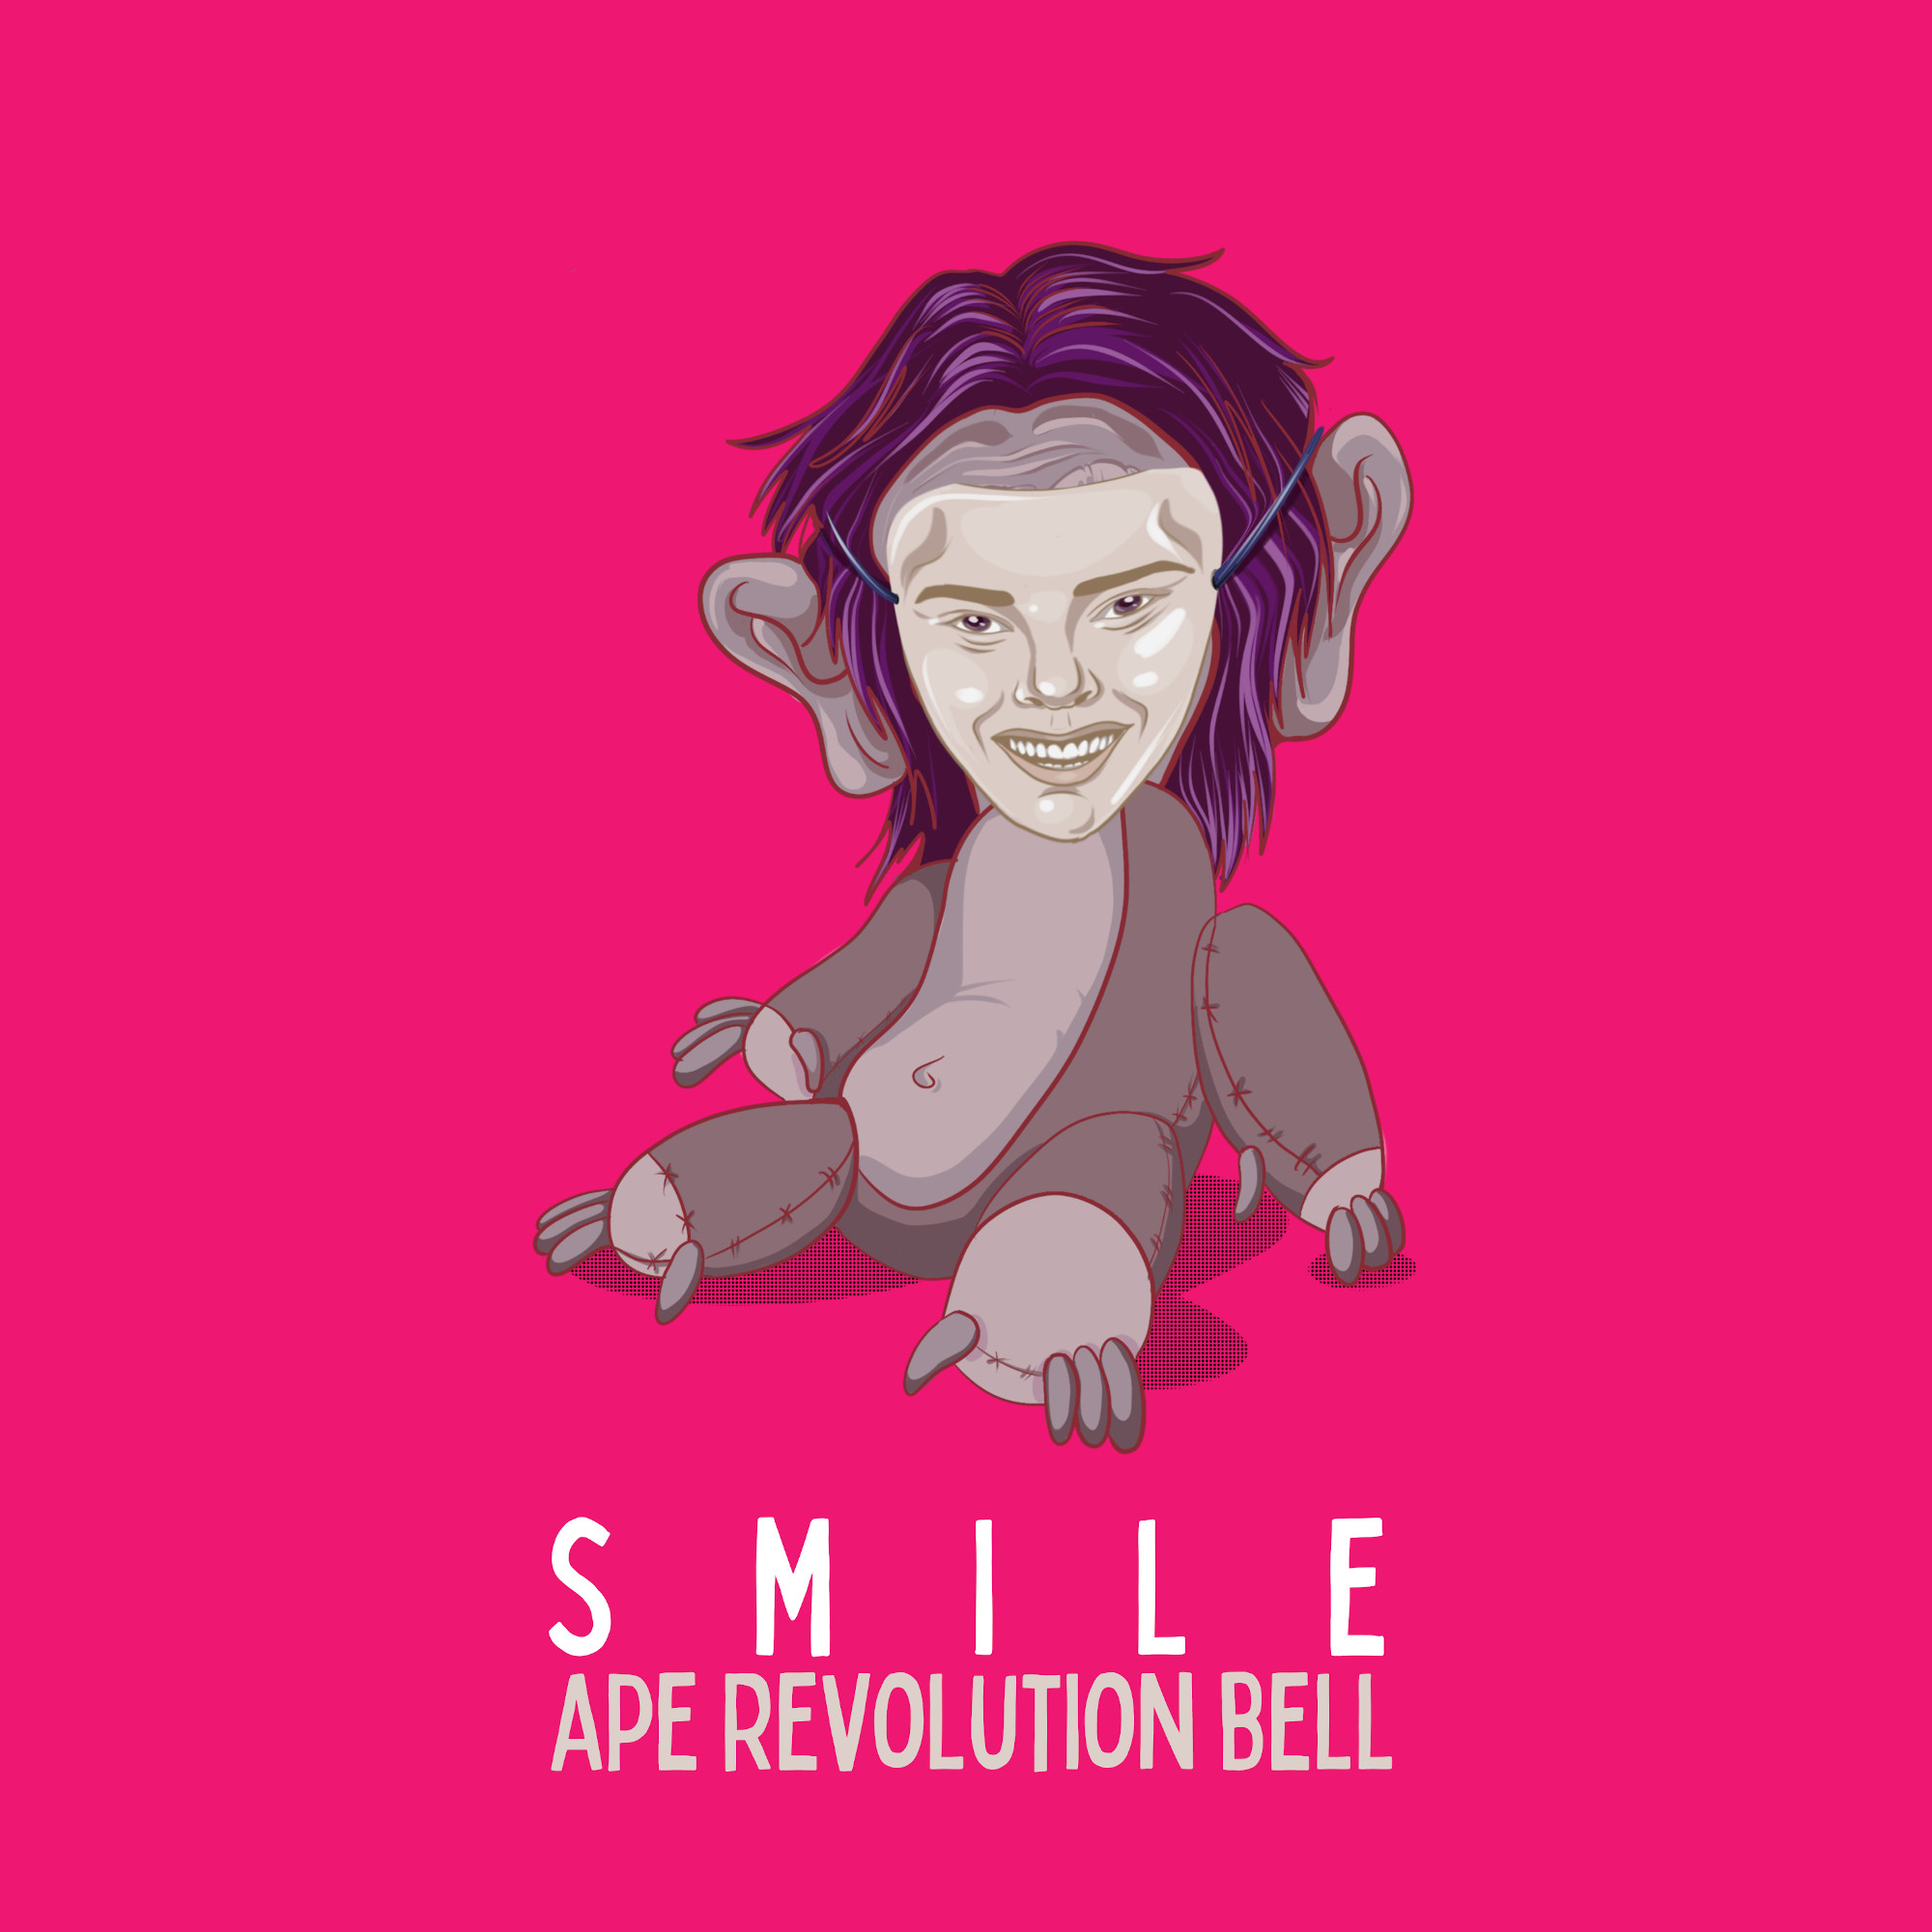 ‘Smile’: Ape Revolution Bell debut single on AltRo Records